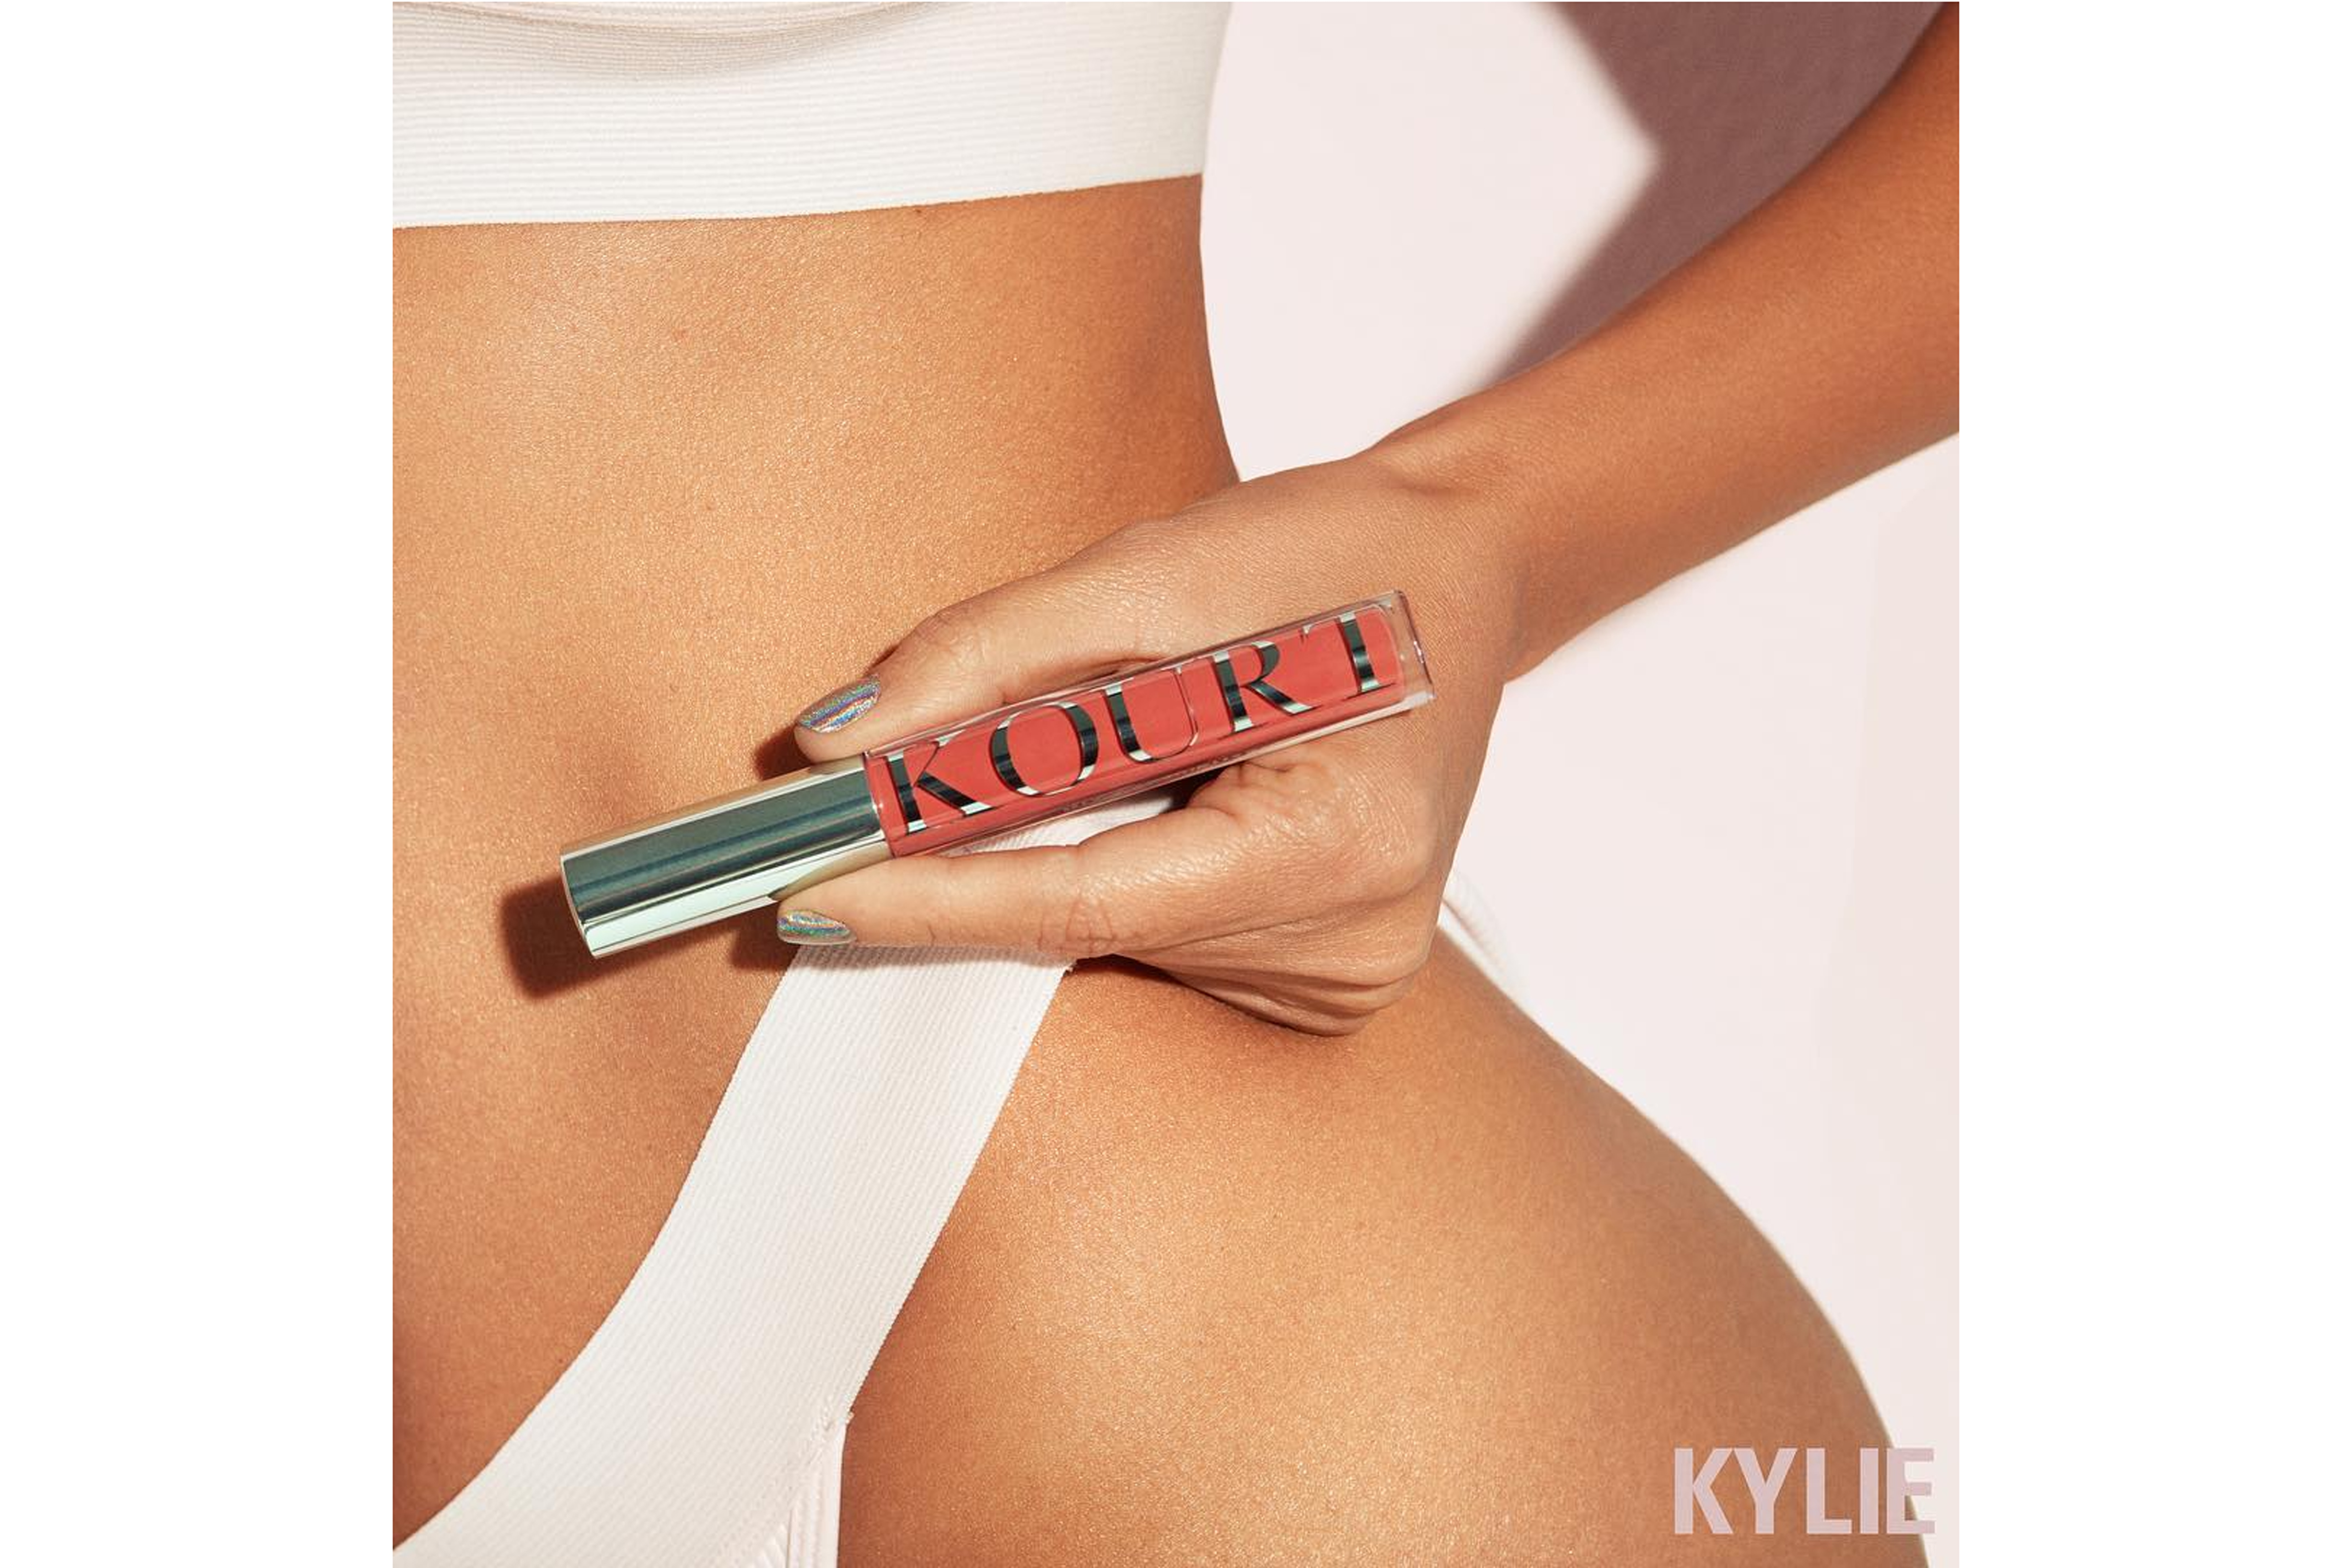 Kylie Cosmetics x Kourtney Kardashian Collection Kylie Jenner Makeup Teaser Reveal Lipstick